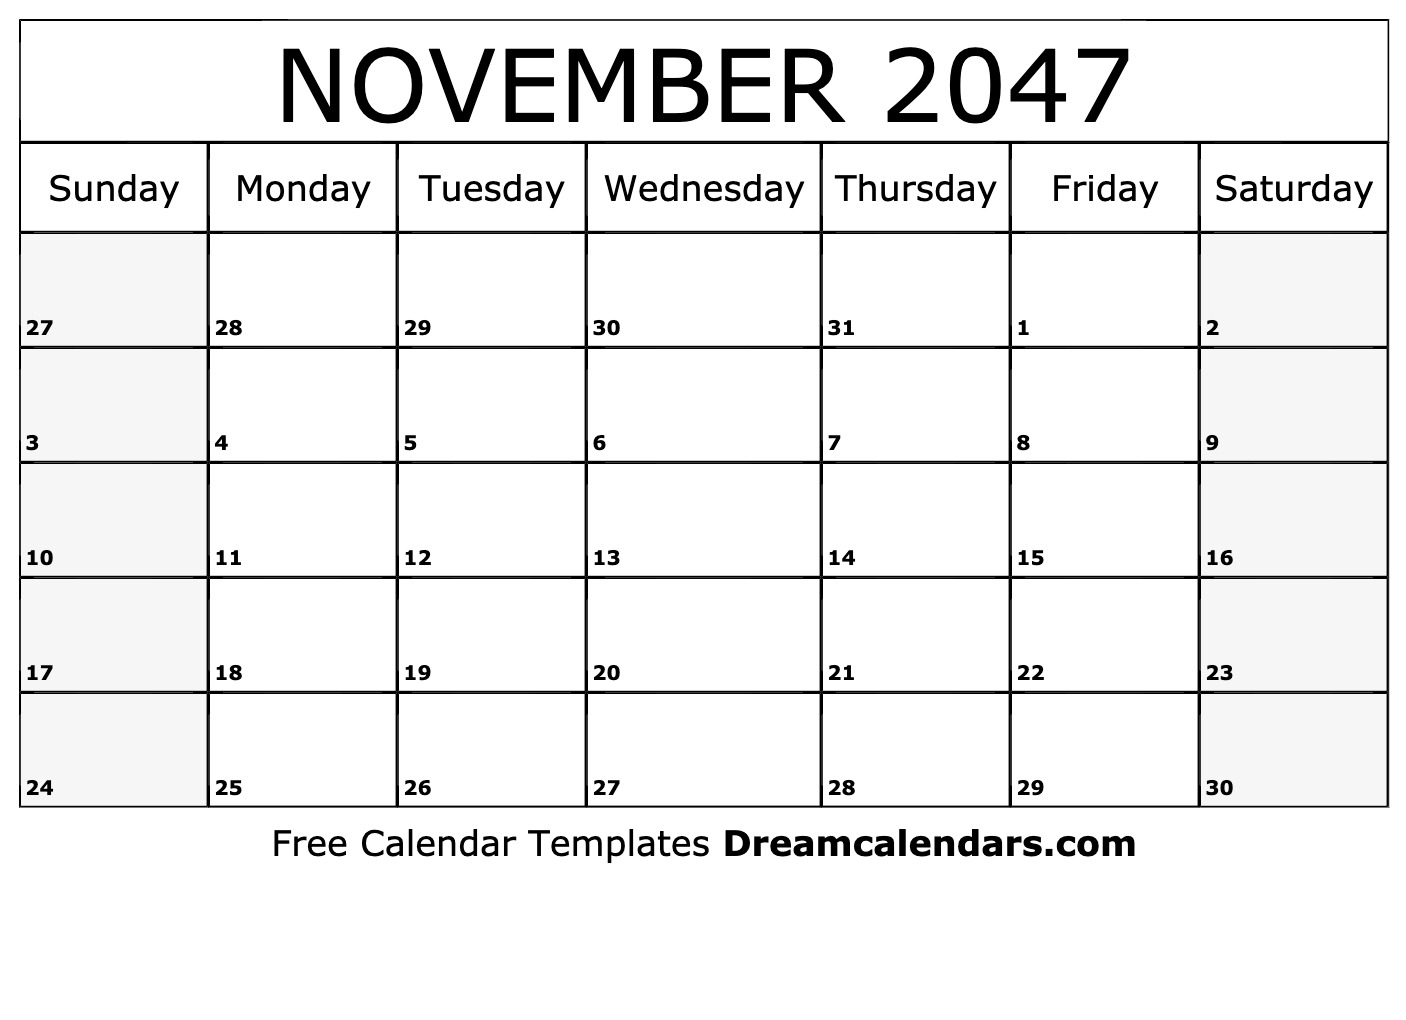 November 2047 Calendar Free Blank Printable With Holidays